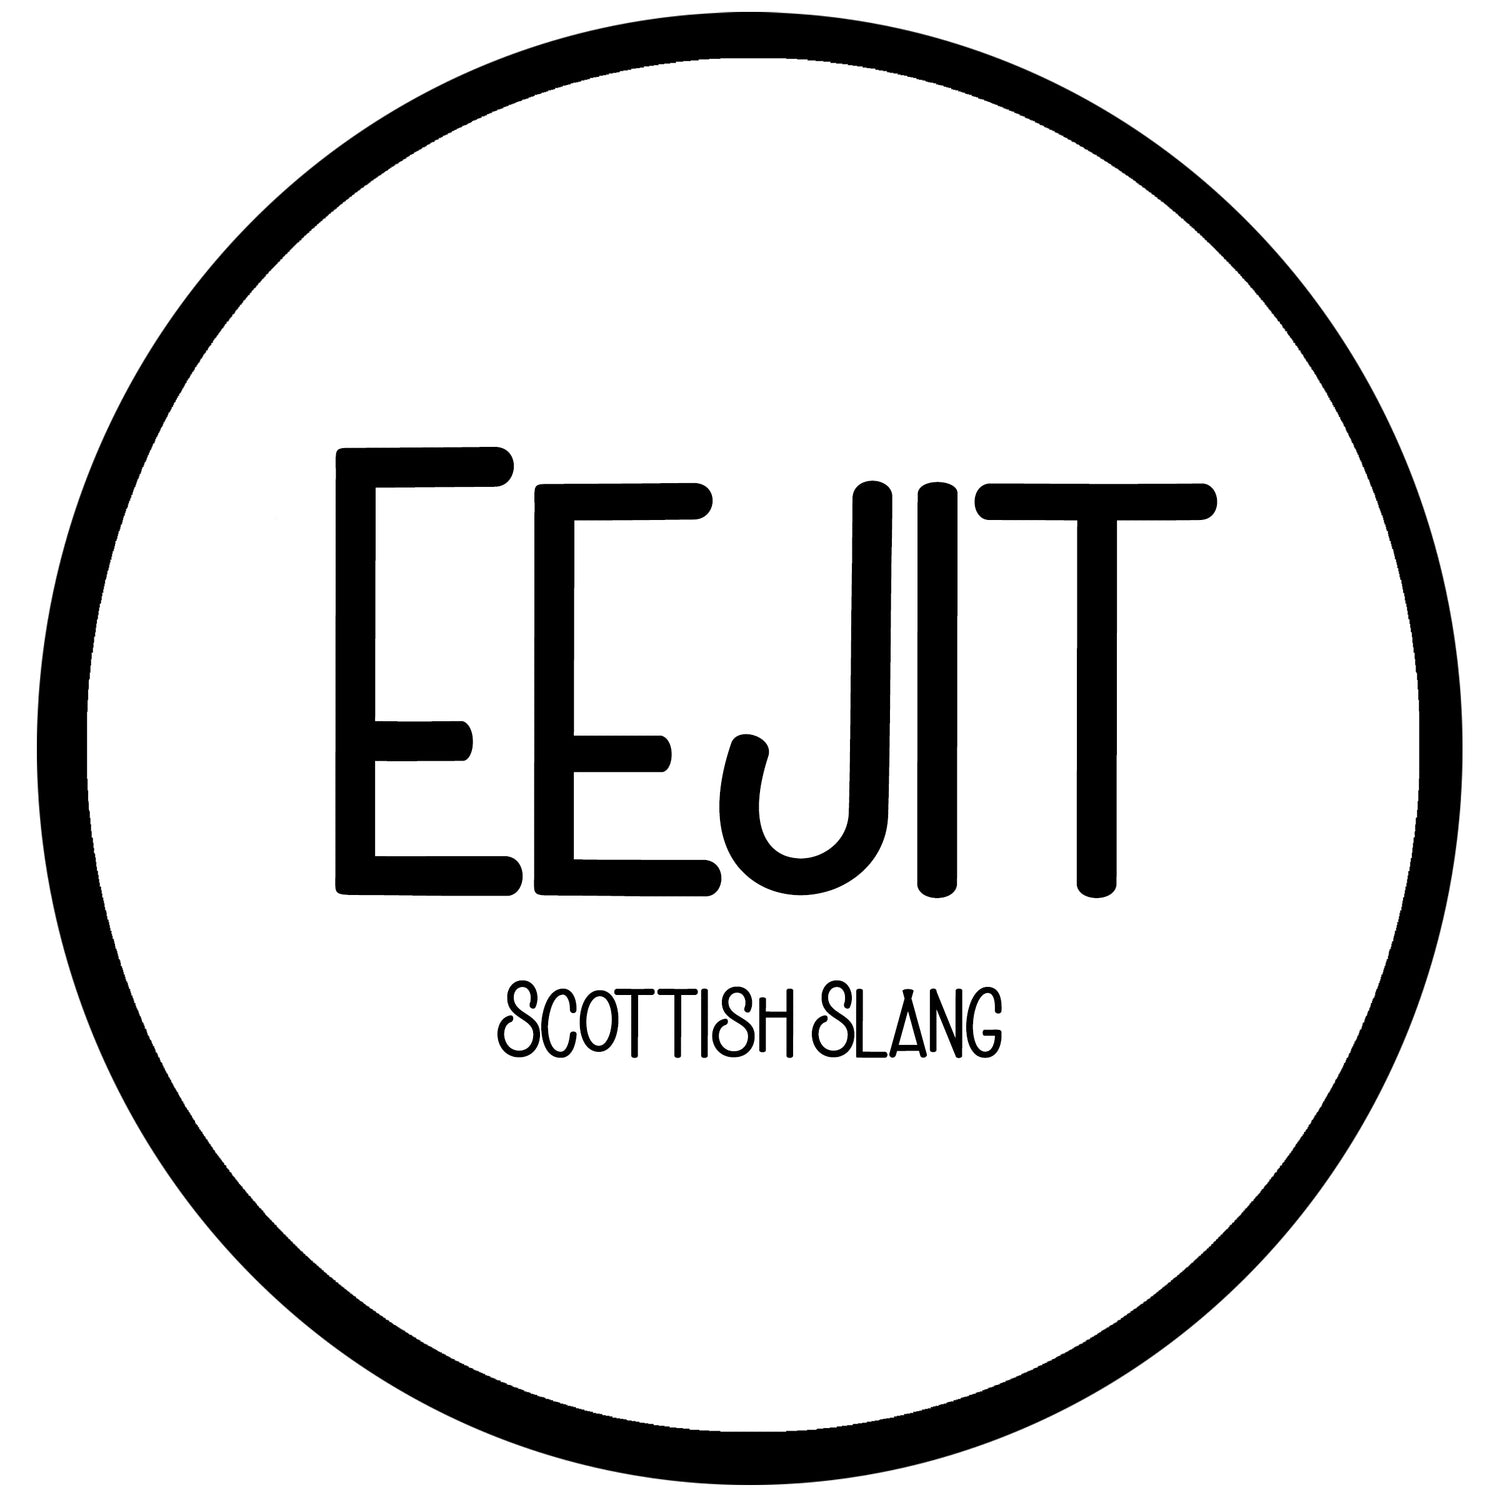 Eejit - Scots Slang